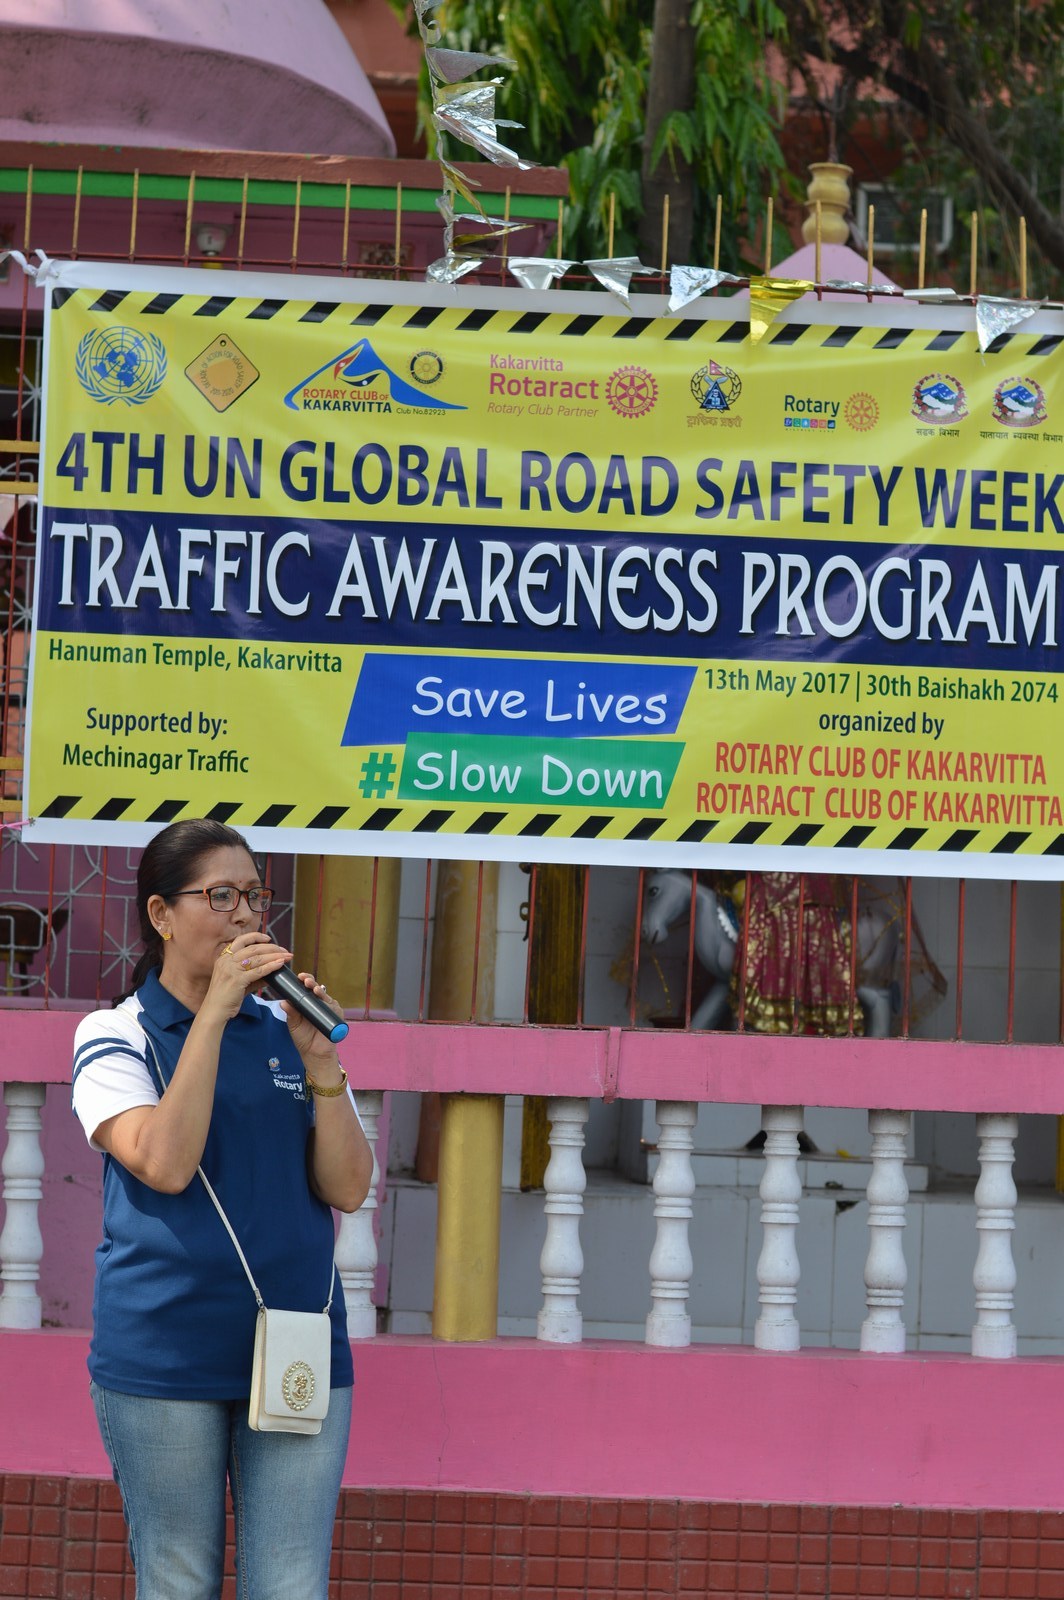 4th-UN-Global-Road-Safety-Week-2017-Traffic-Awareness-Program-Rotary-club-of-Kakarvitta-36